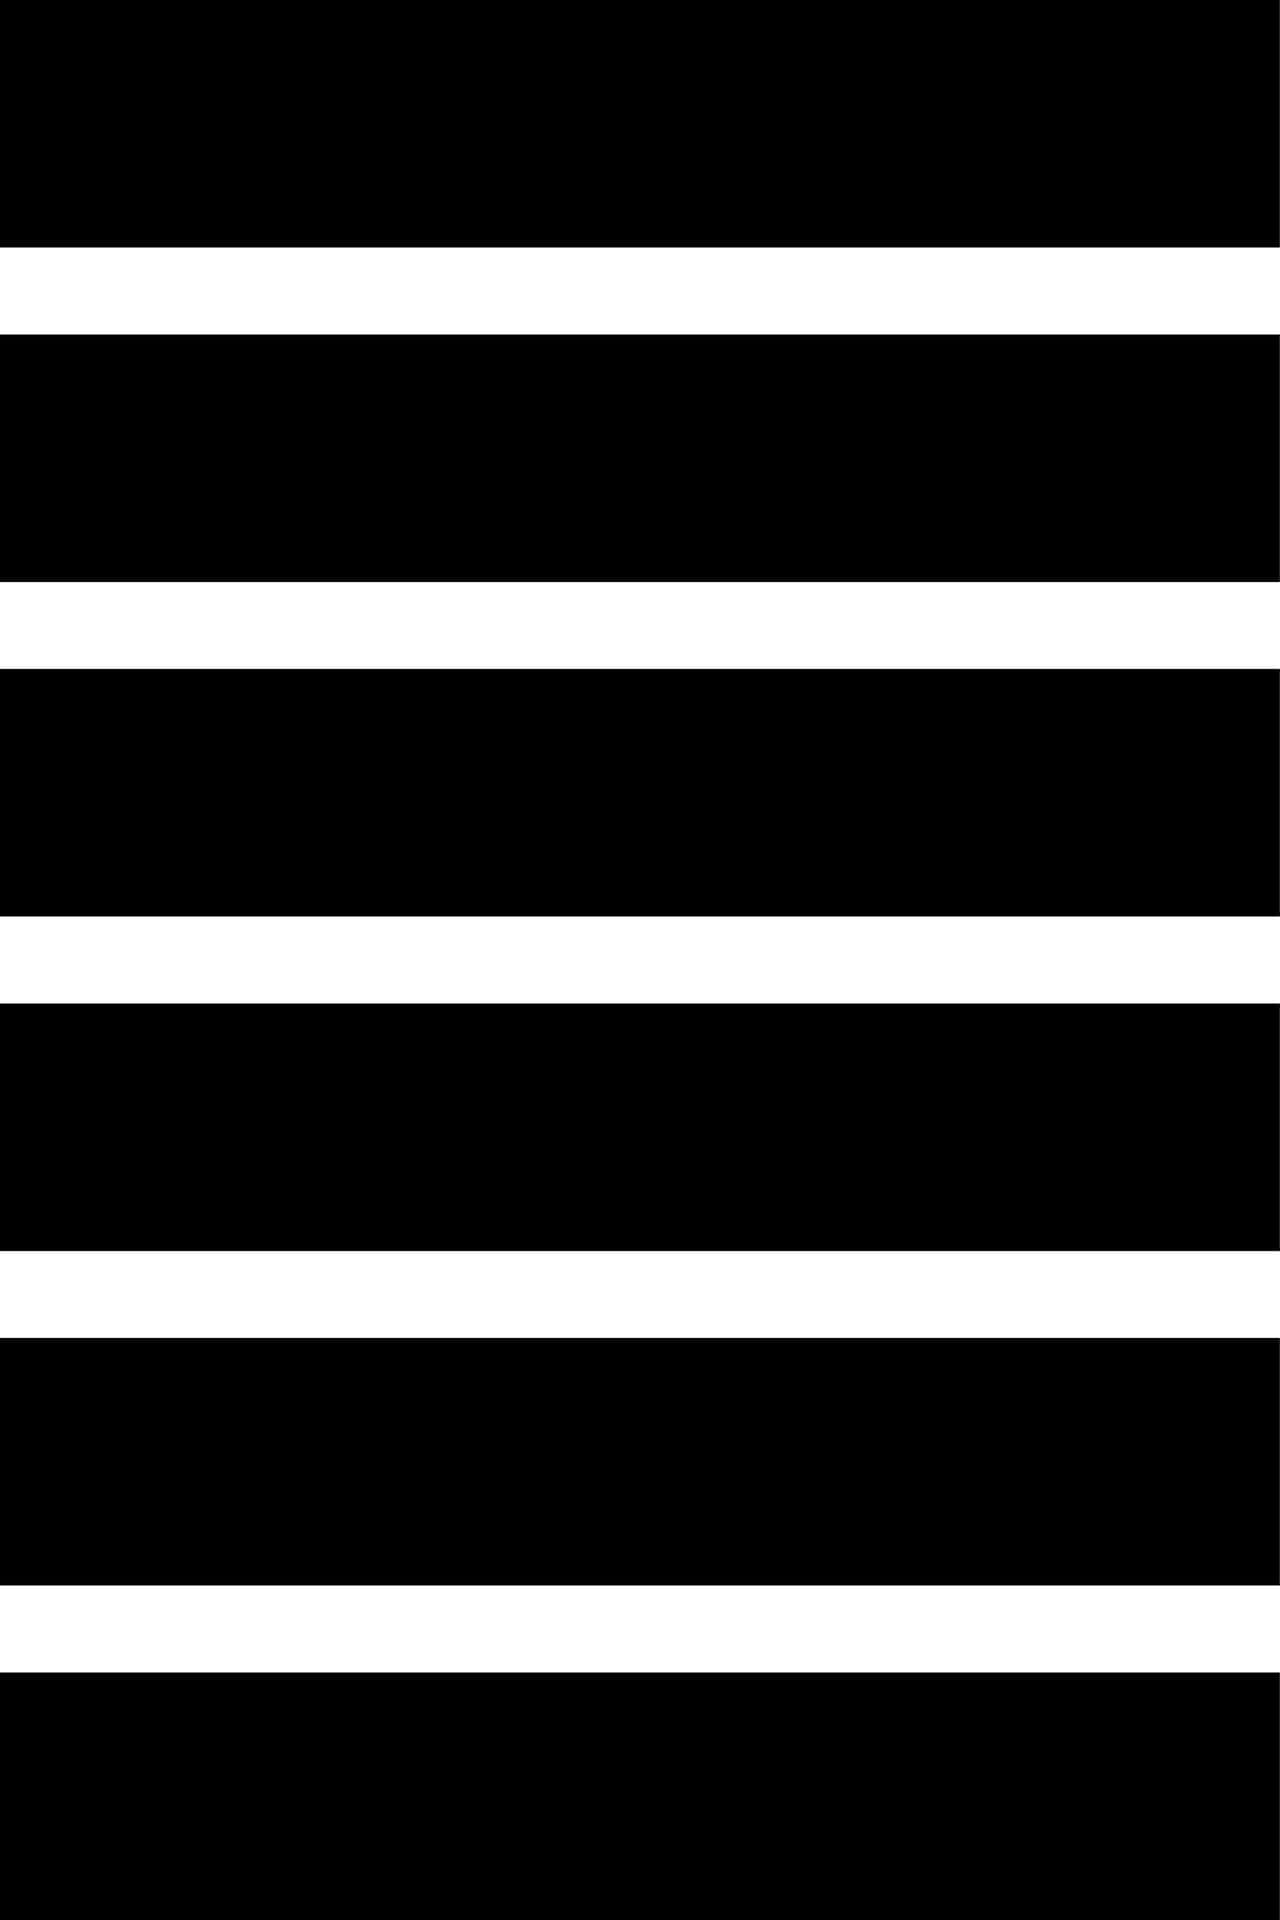 A Black And White Stripe With White Stripes